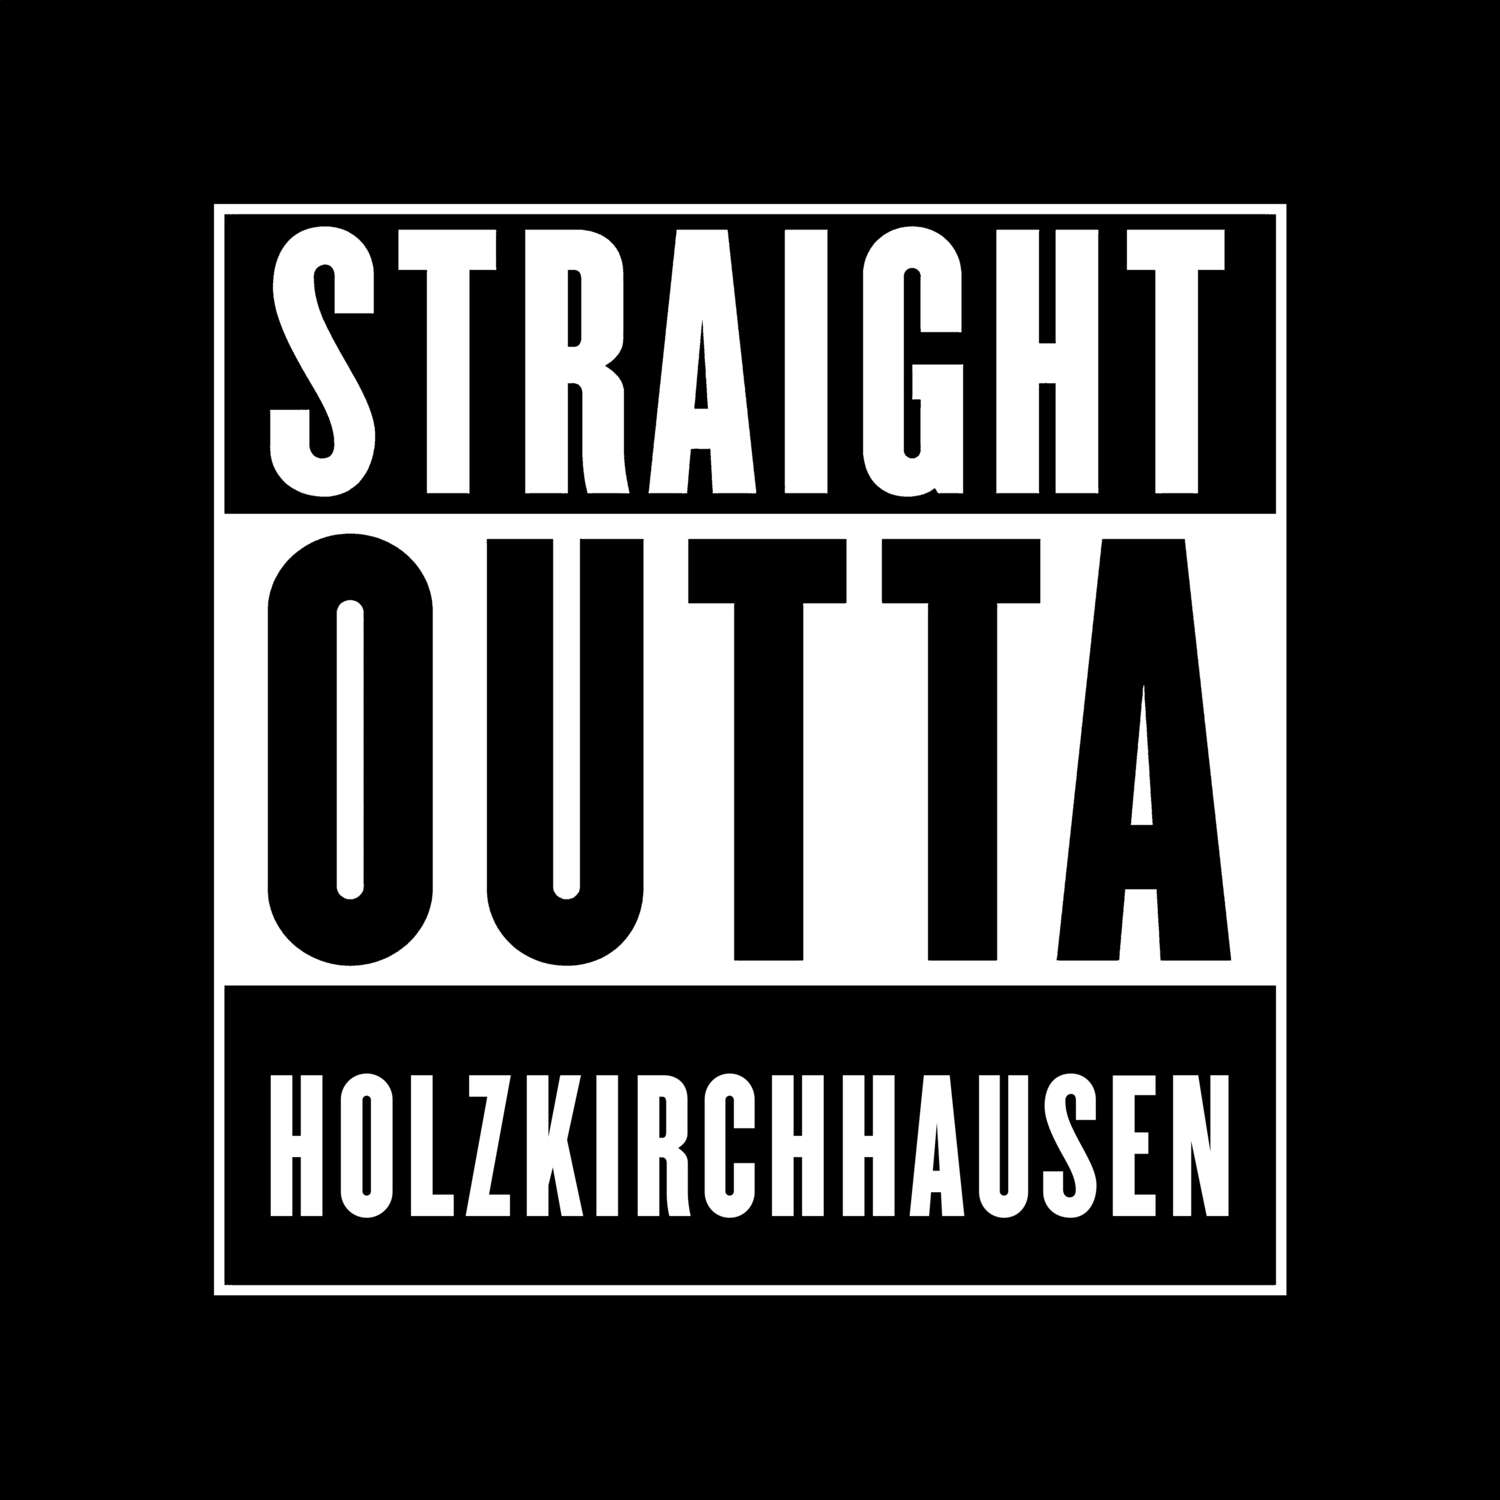 Holzkirchhausen T-Shirt »Straight Outta«